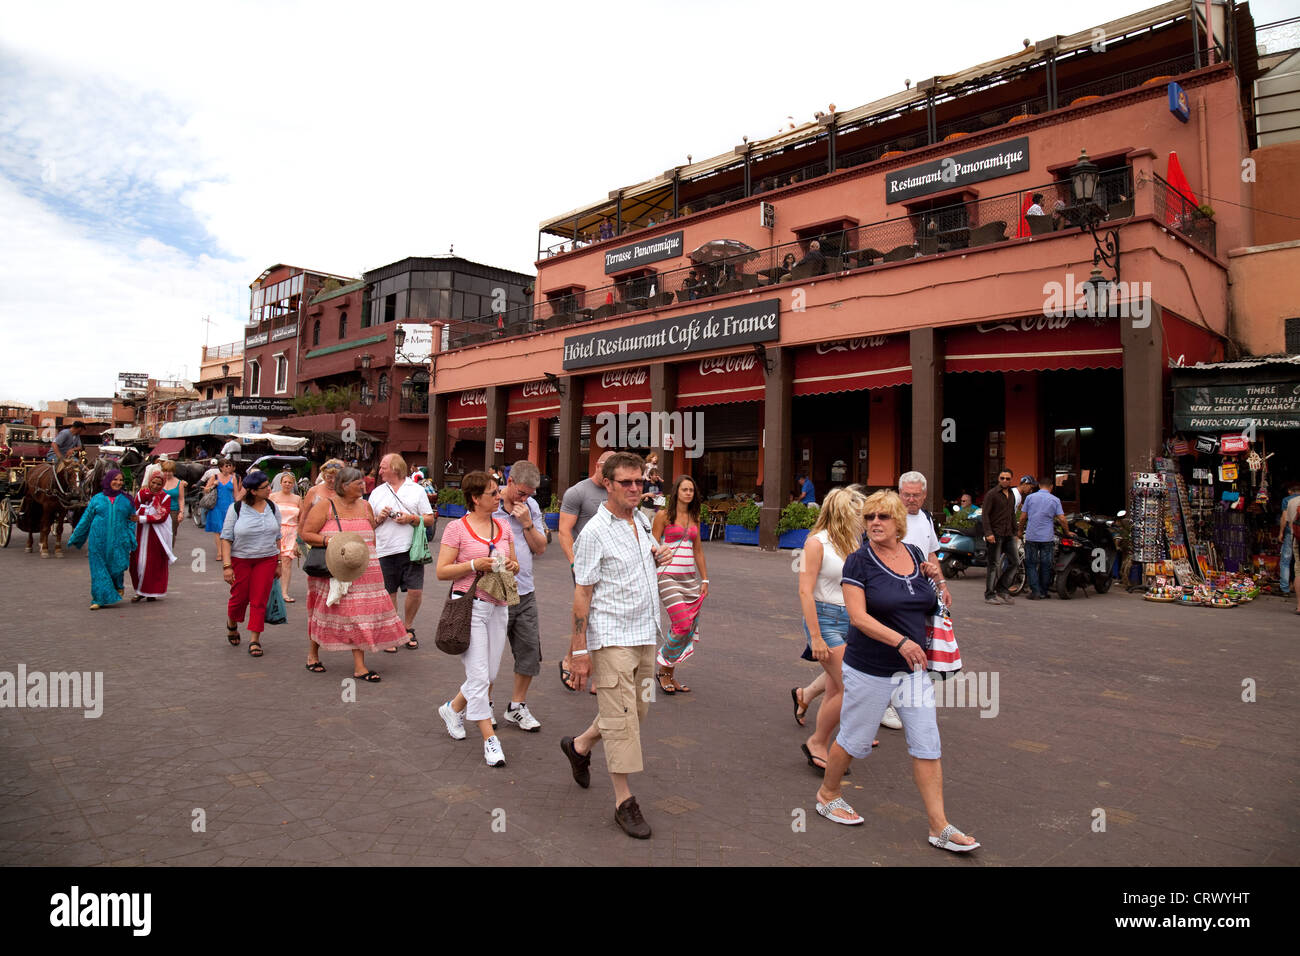 Die Leute vor dem Cafe de France Hotel, Djemaa el Fna, Marrakech Marokko Stockfoto